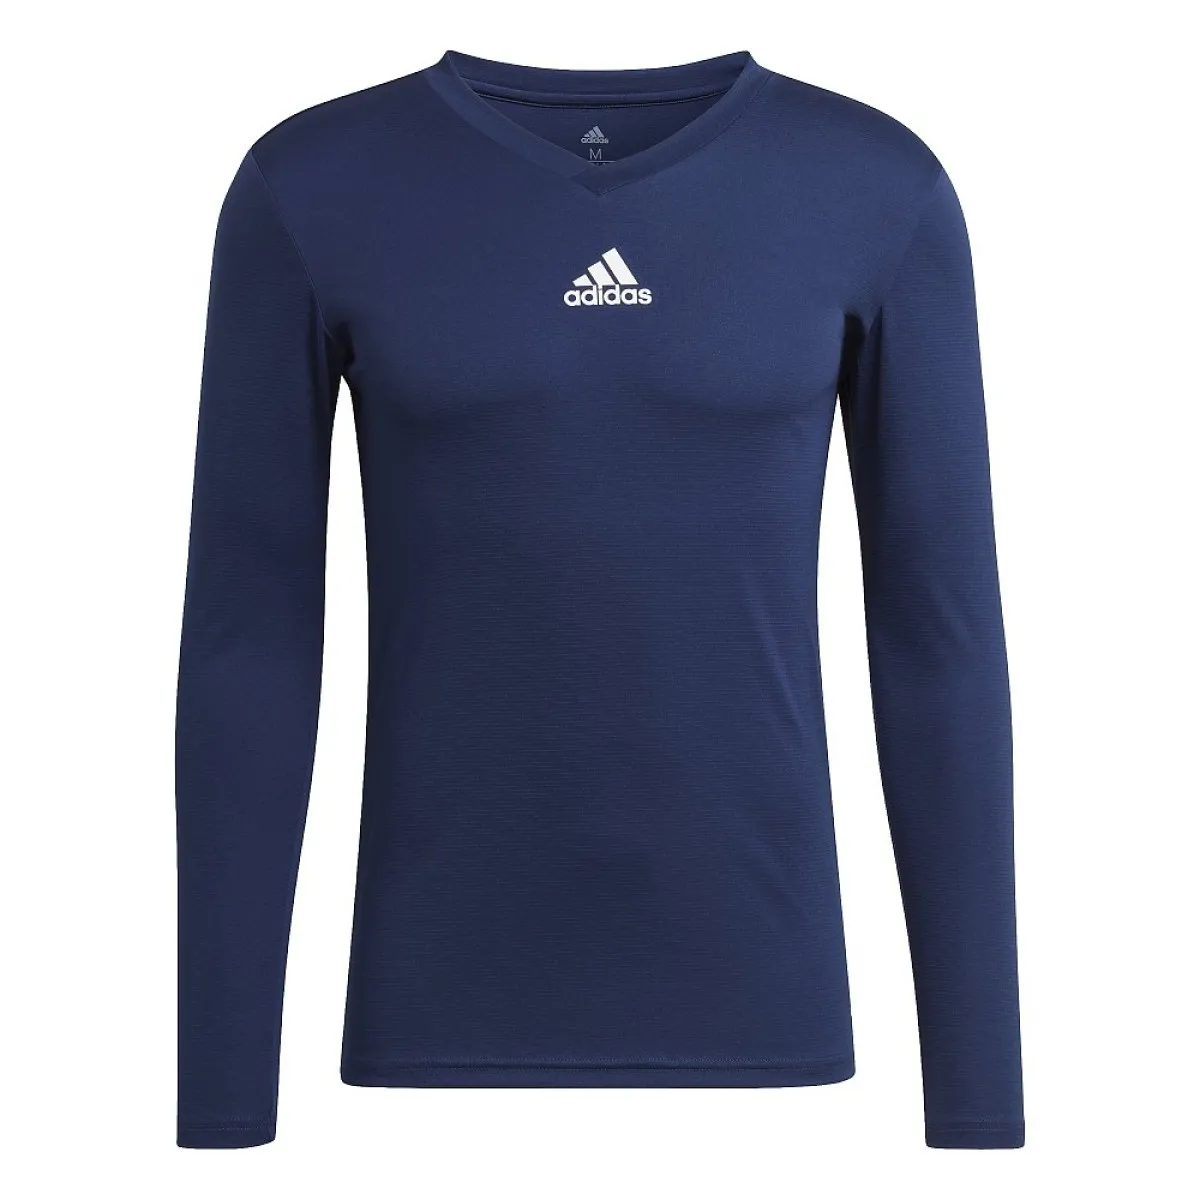 adidas Techfit T-Shirt long sleeve Team Base navy blue 13-ADIGN5675